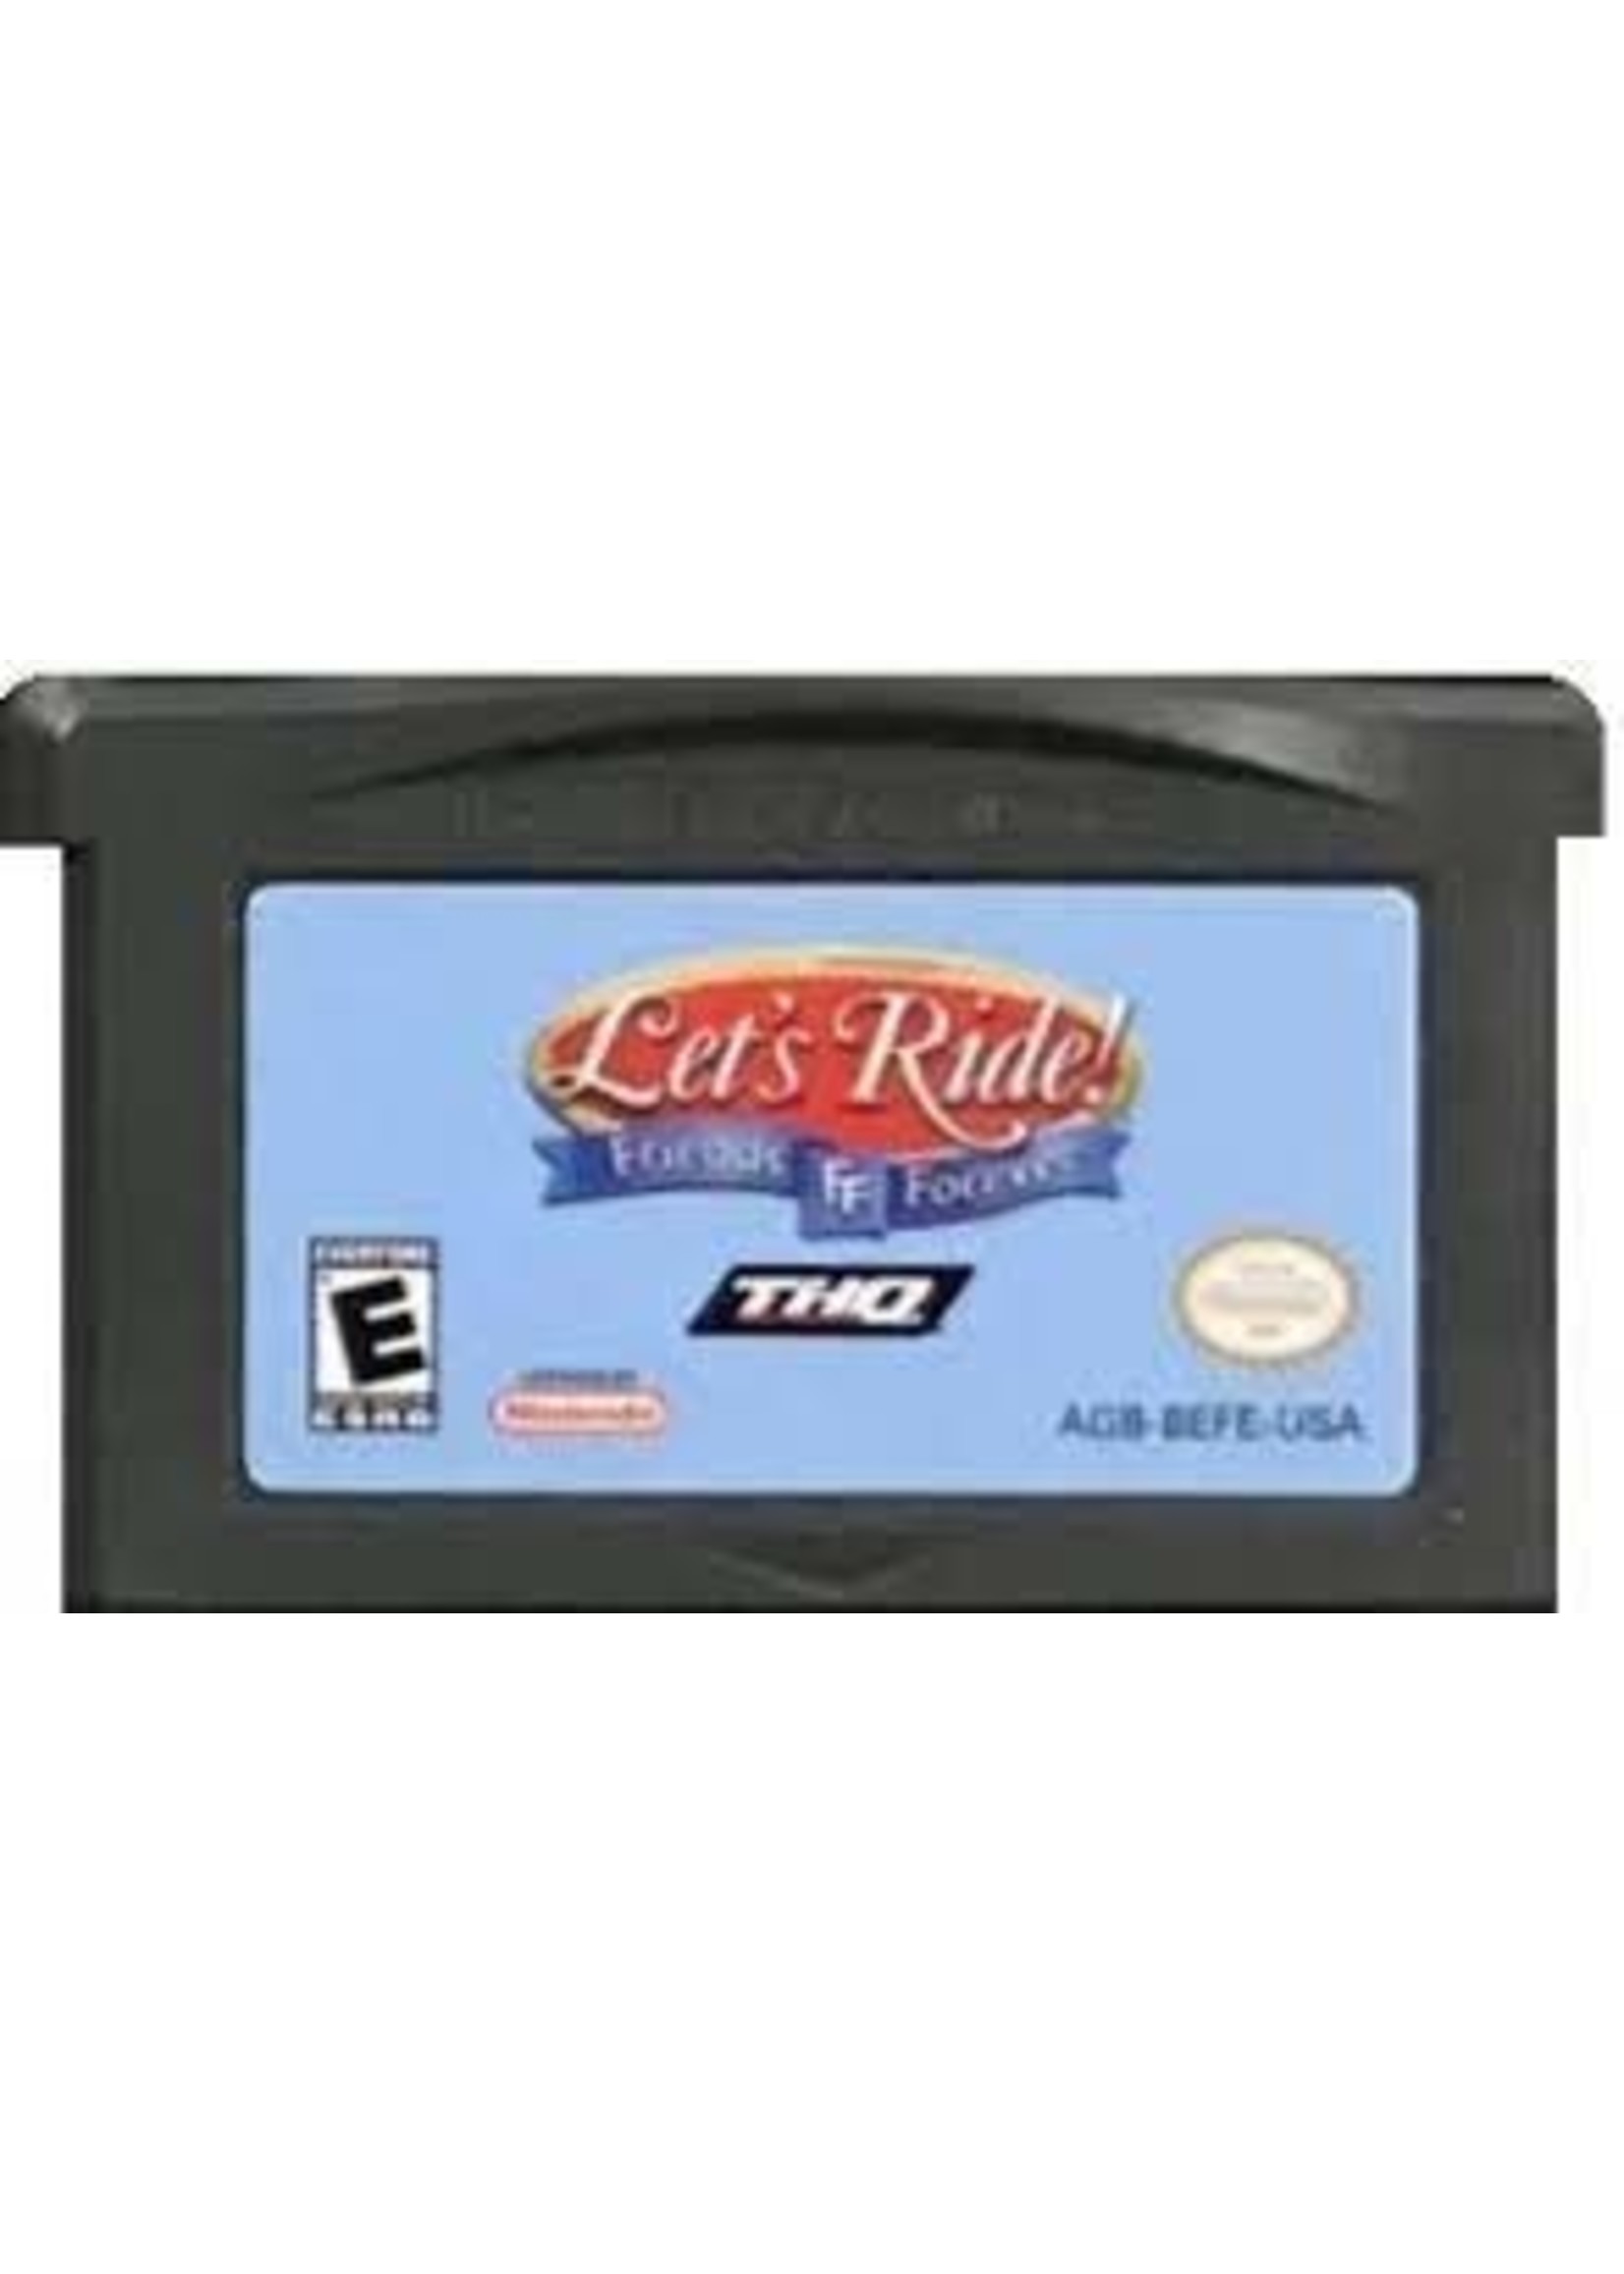 Nintendo Gameboy Advance Let's Ride Friends Forever